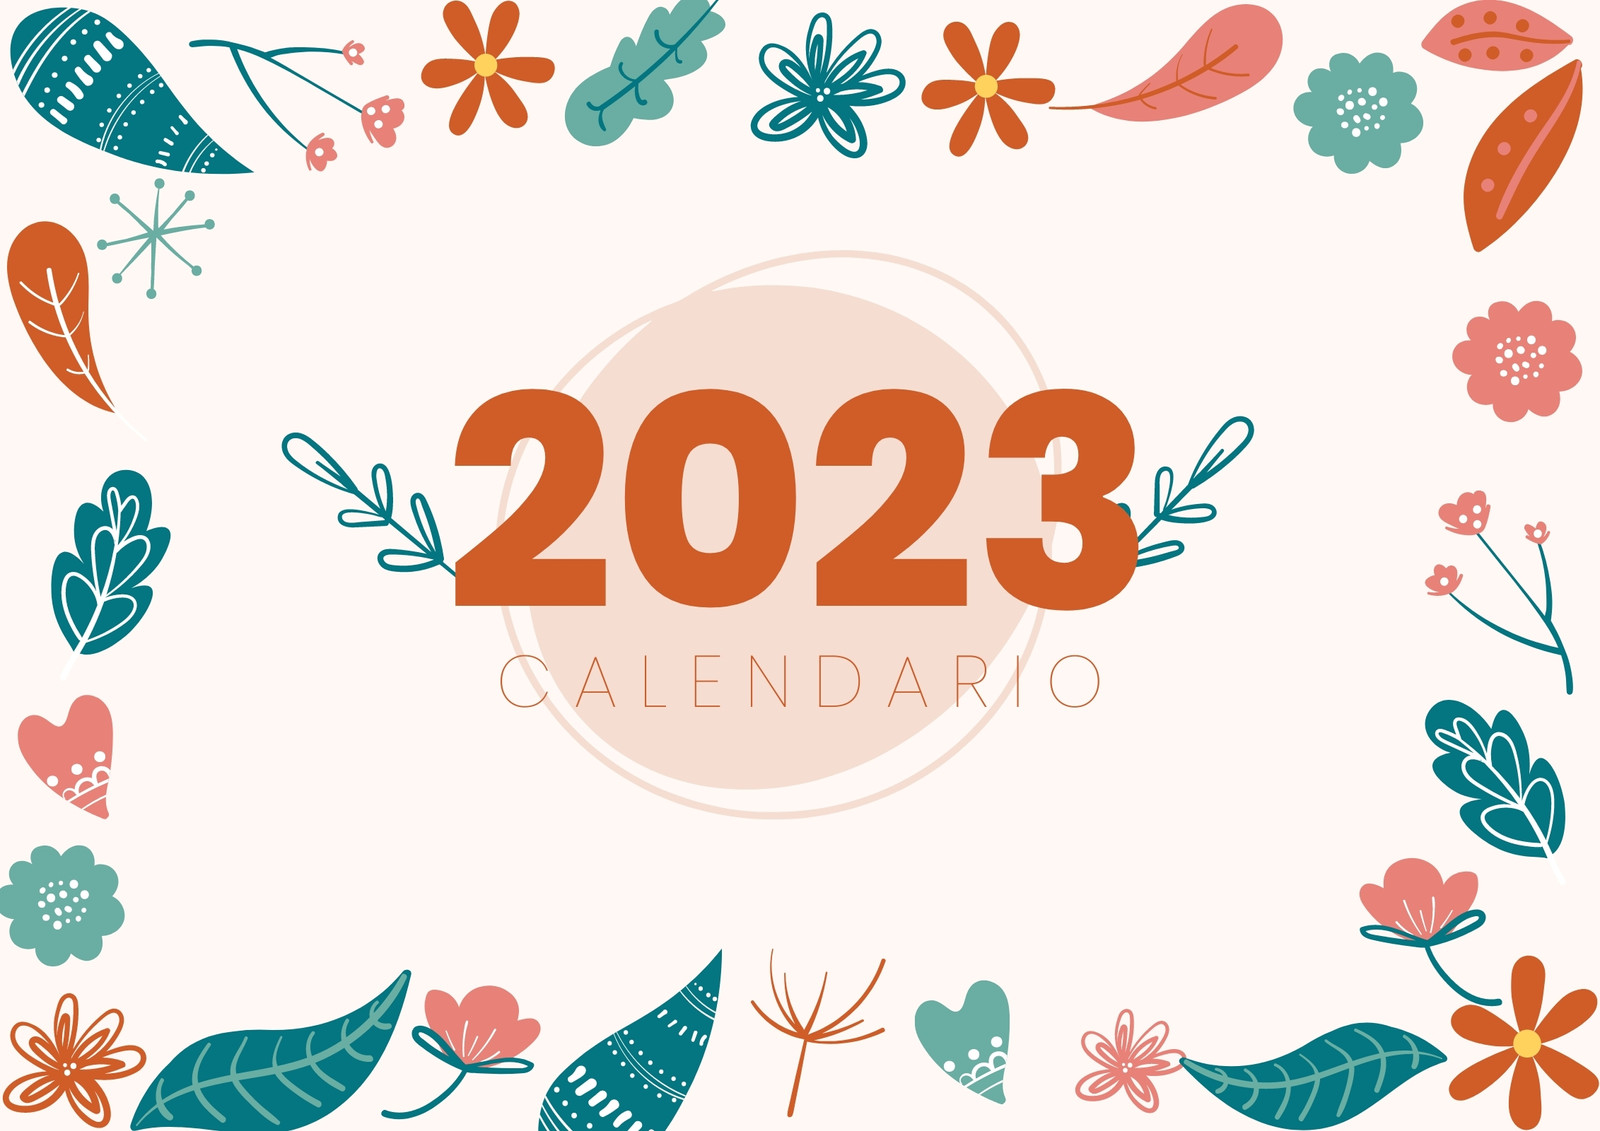 Calendario para pared A4 horizontal calendario 2023 flora ilustrada colores naranja verde rosa turquesa